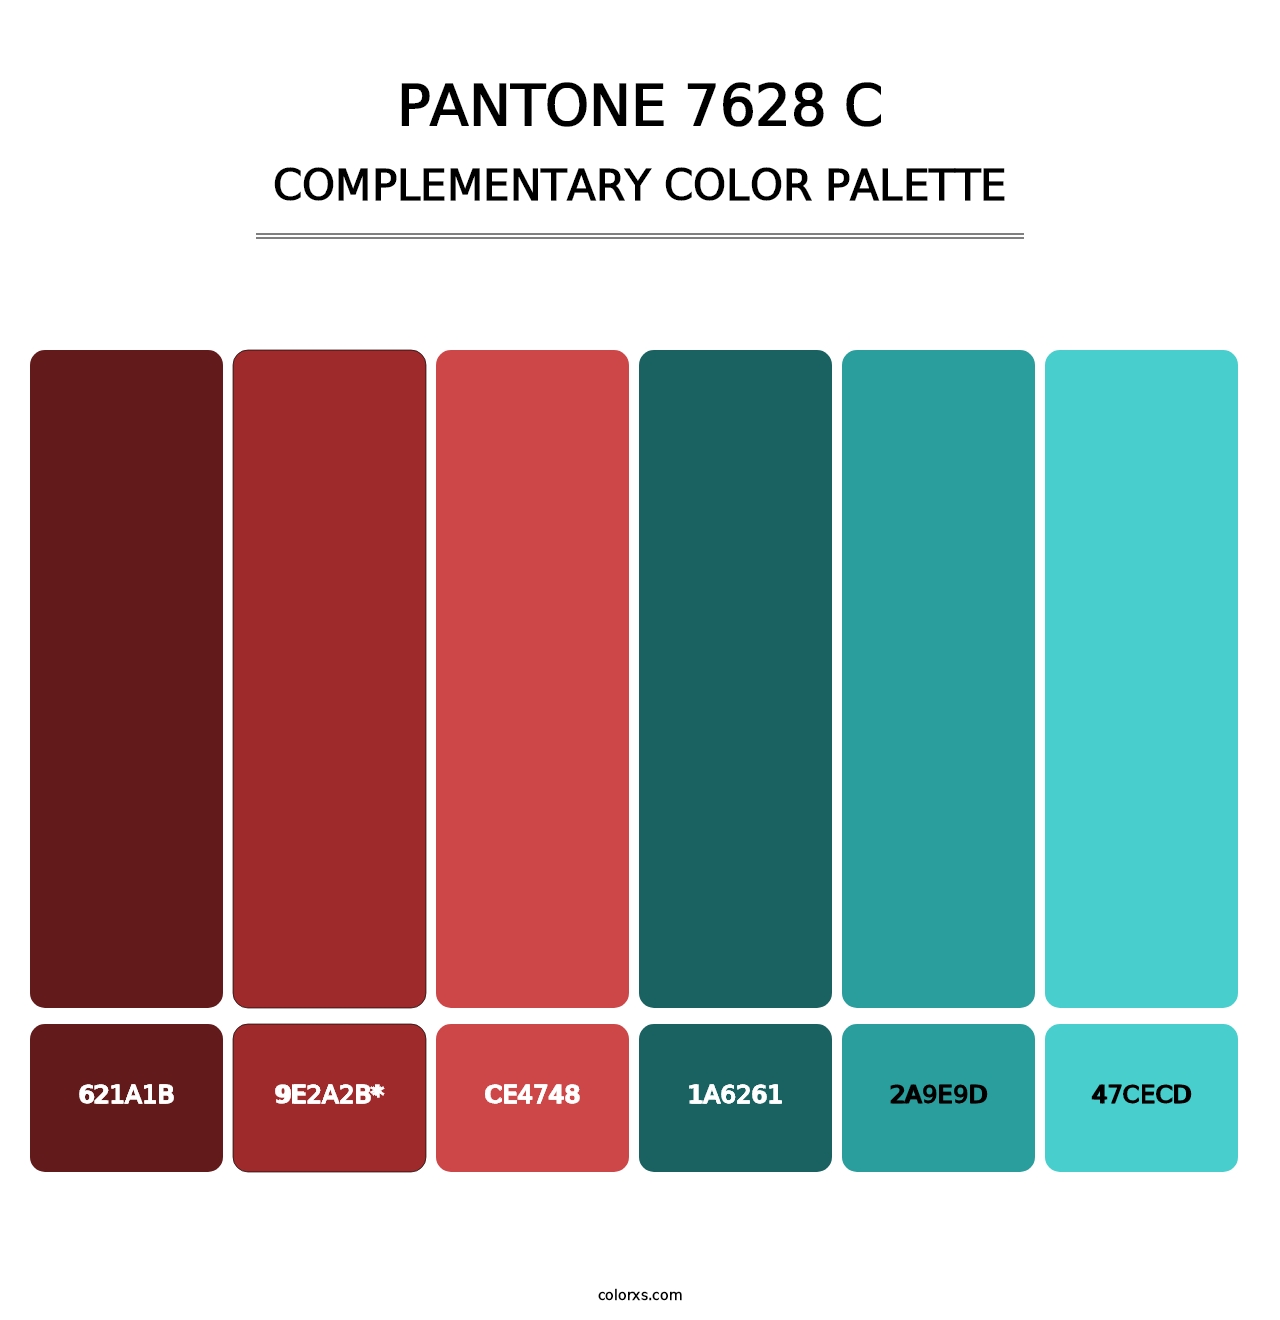 PANTONE 7628 C - Complementary Color Palette